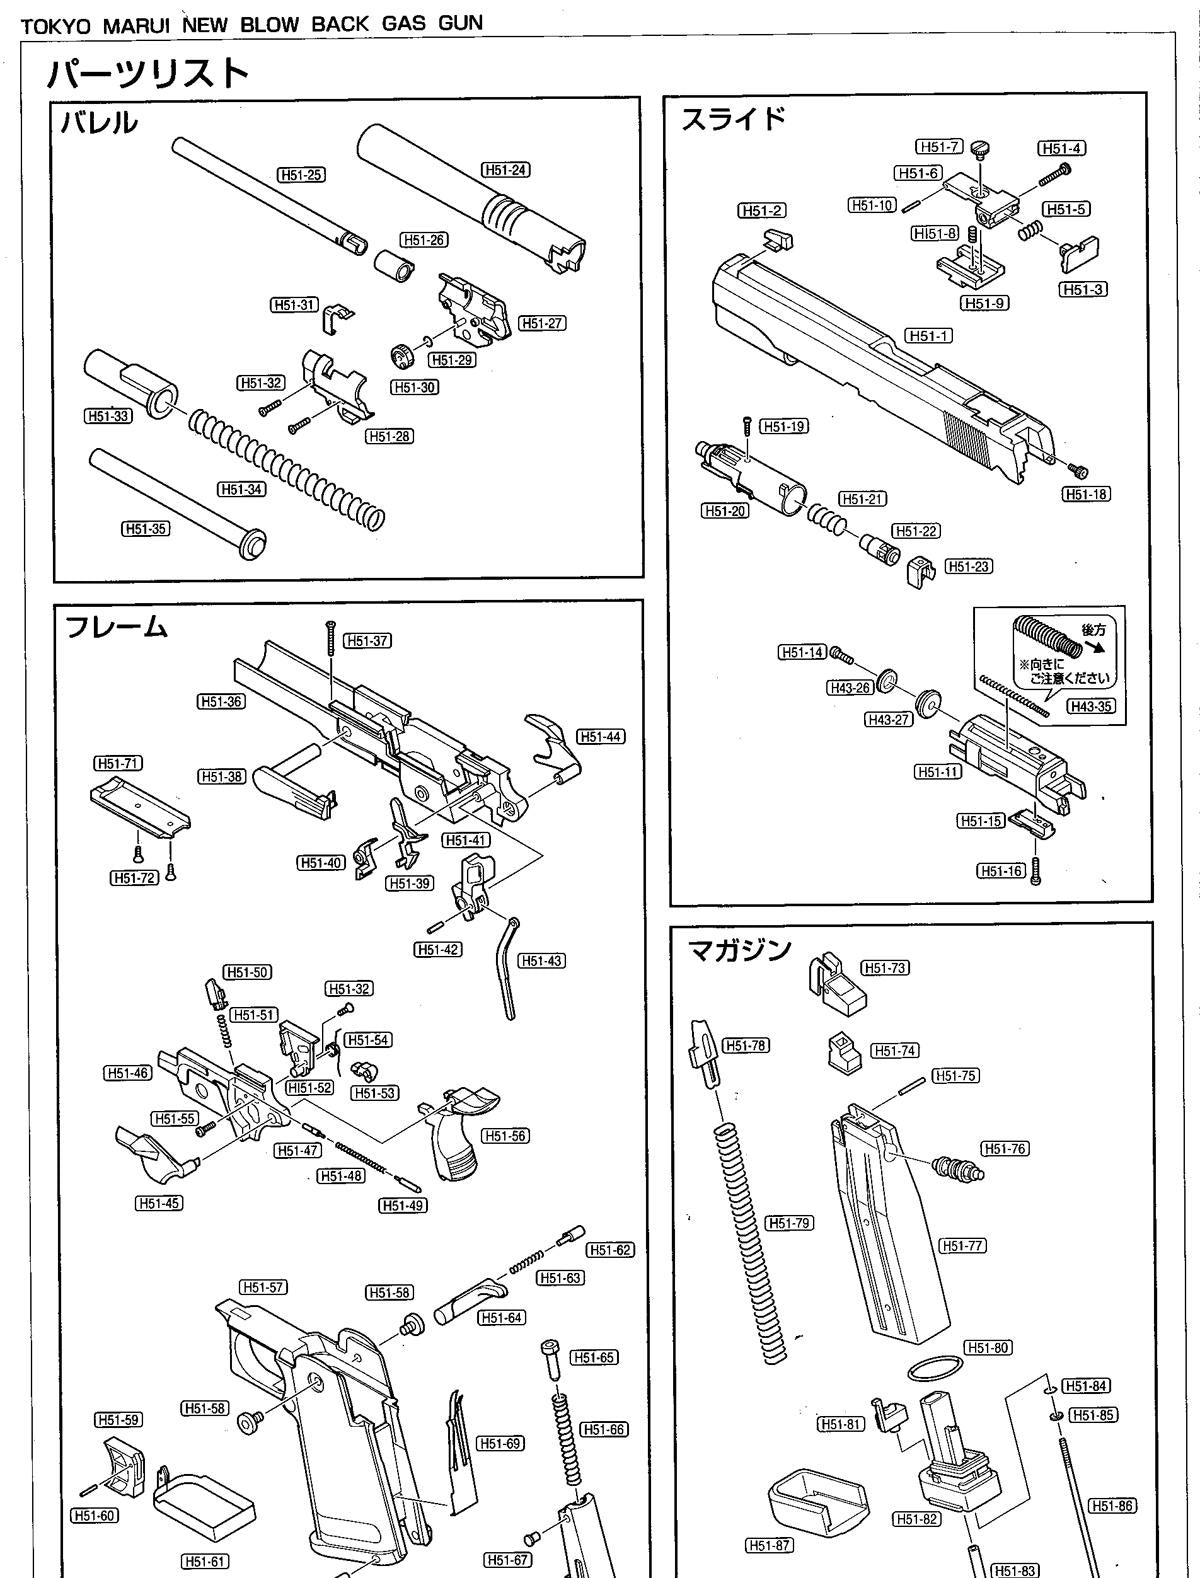 Tokyo Marui Hi-Capa - Replacement Part H51-85 - Magazine base Screw Washer